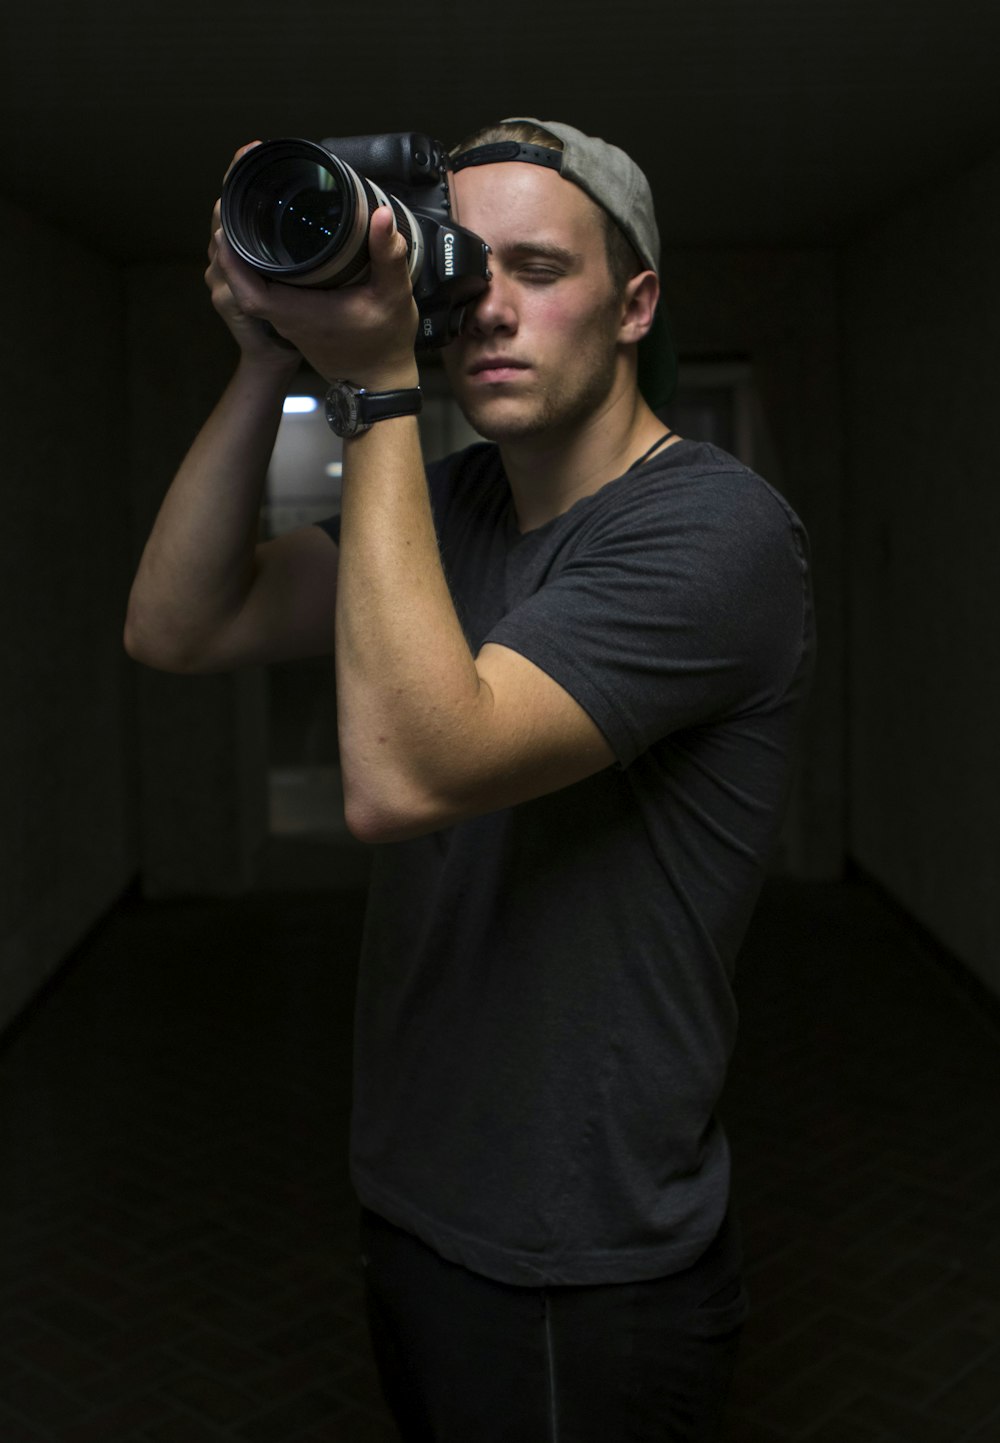 Mann fotografiert mit Canon DSLR-Kamera